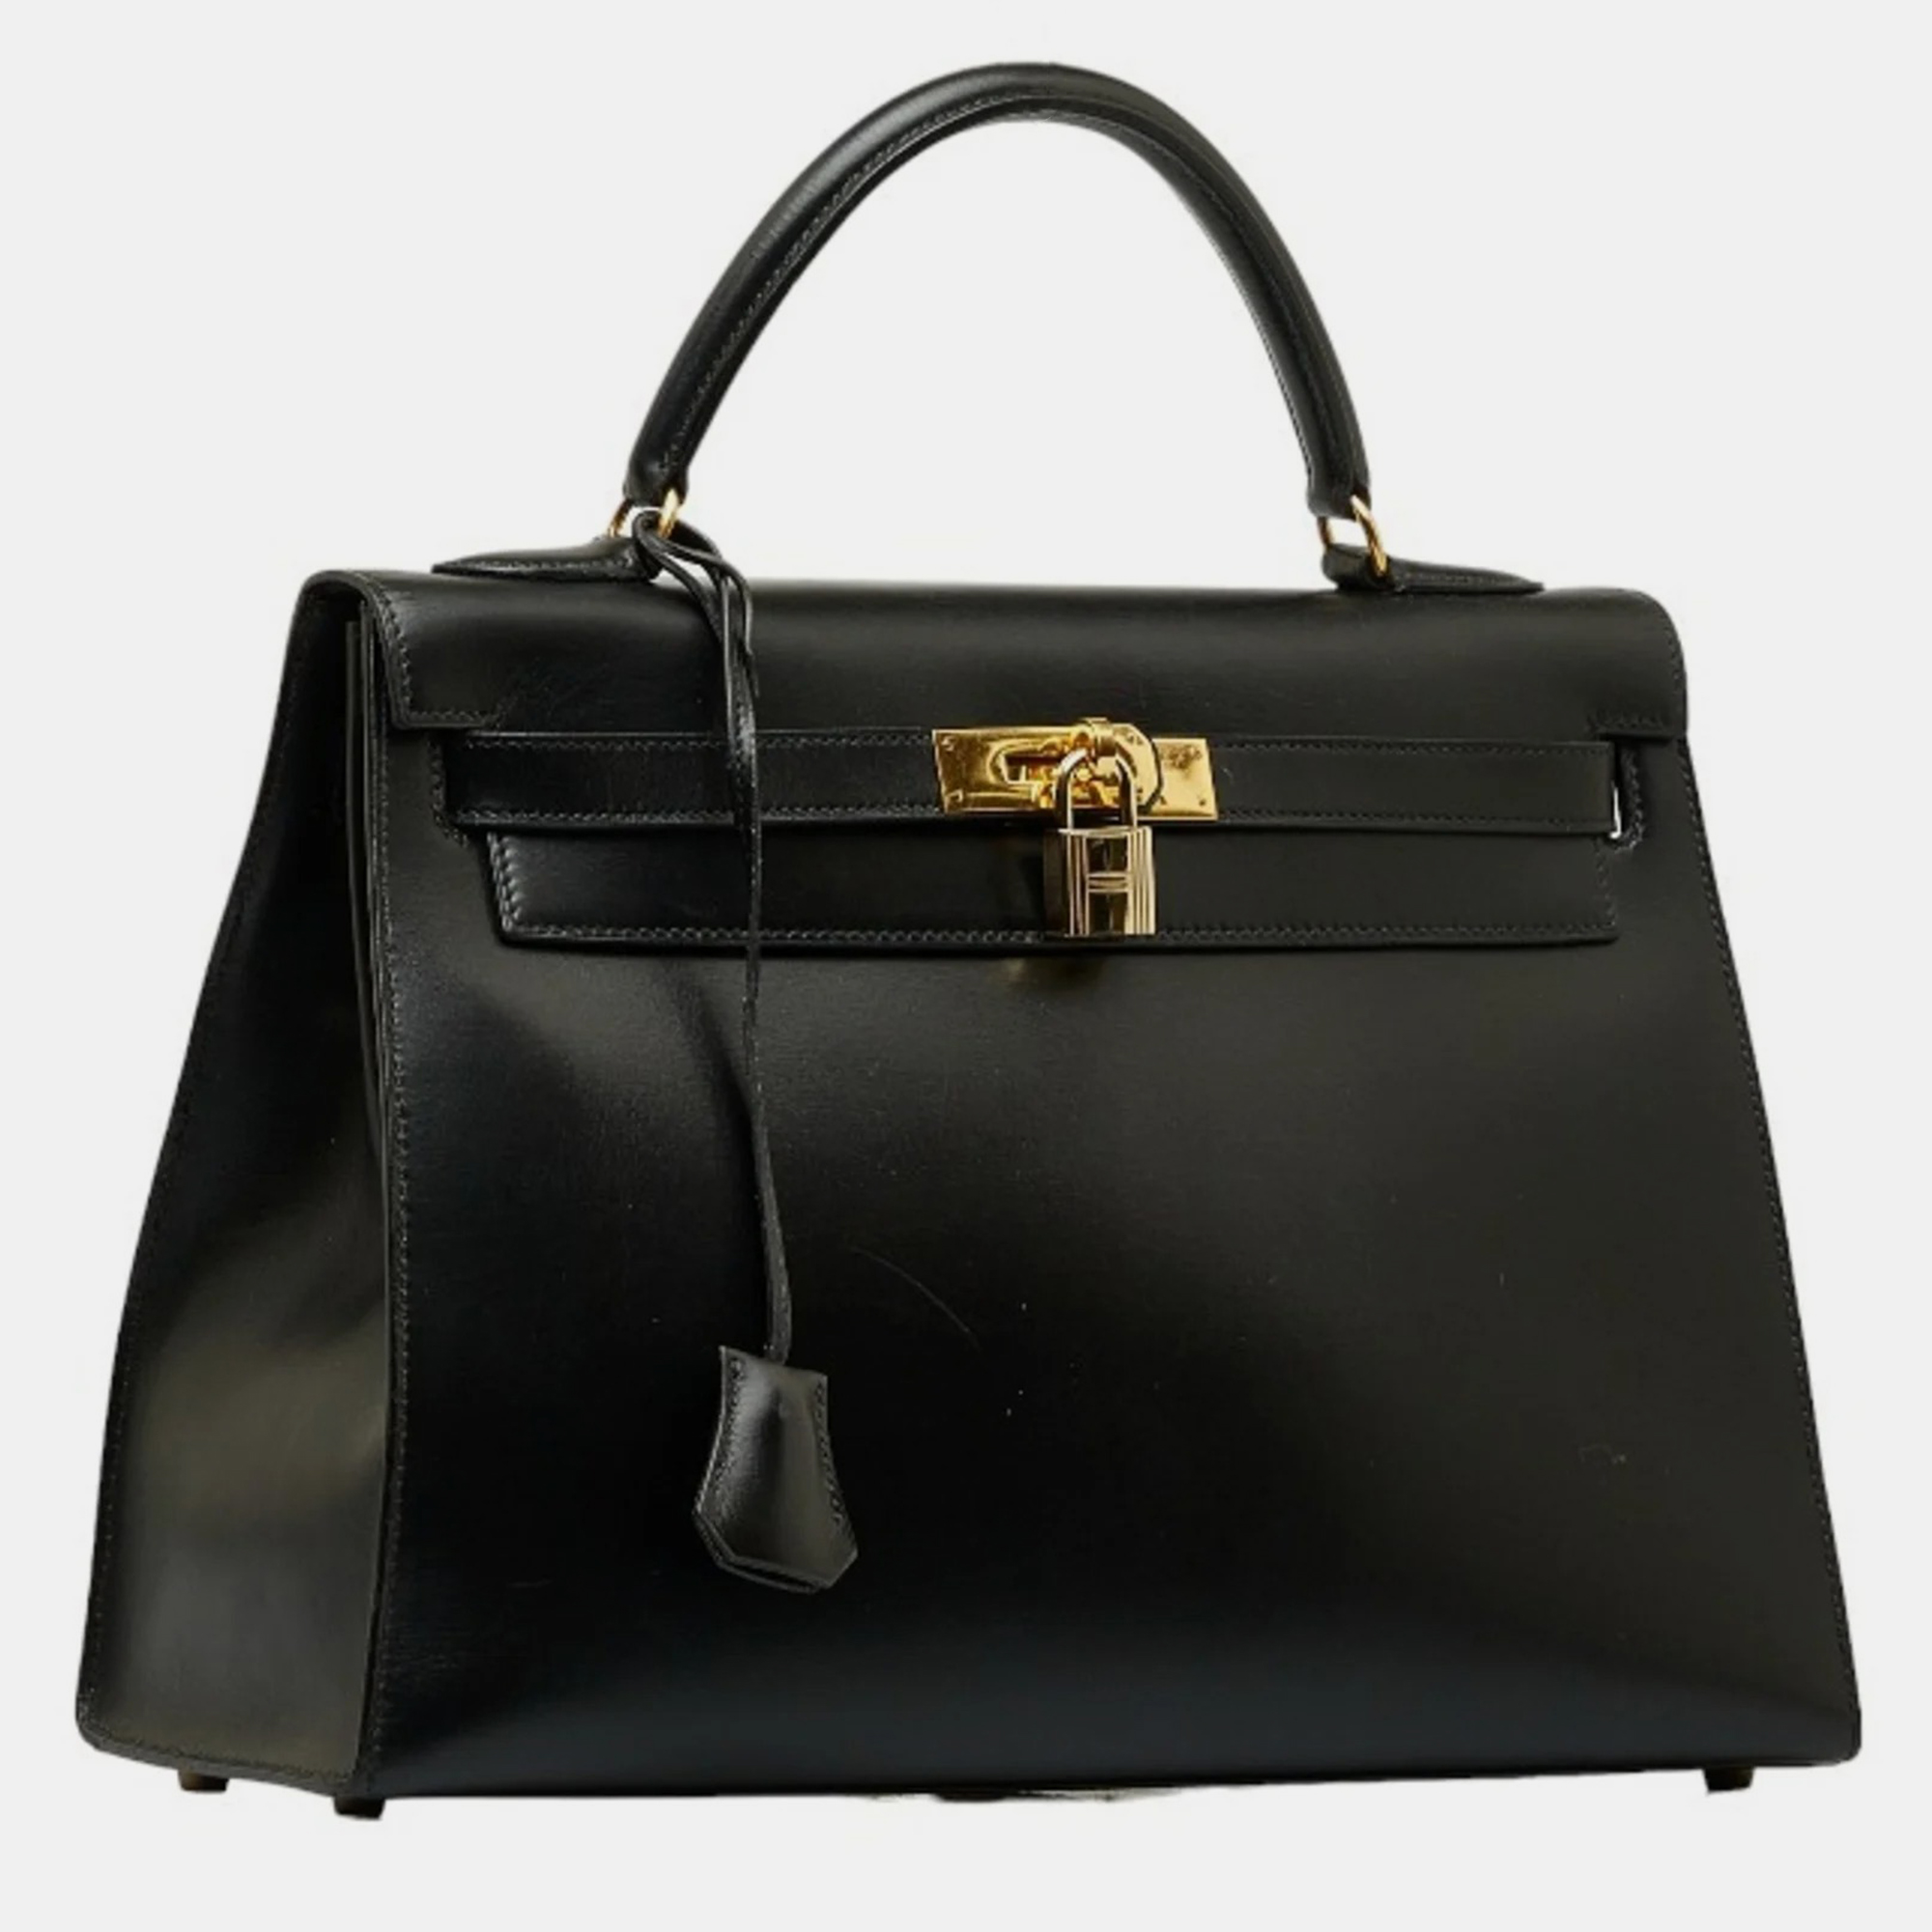 Hermes Kelly 32 Outside Sewing Handbag Shoulder Bag Black Box Calf Women's